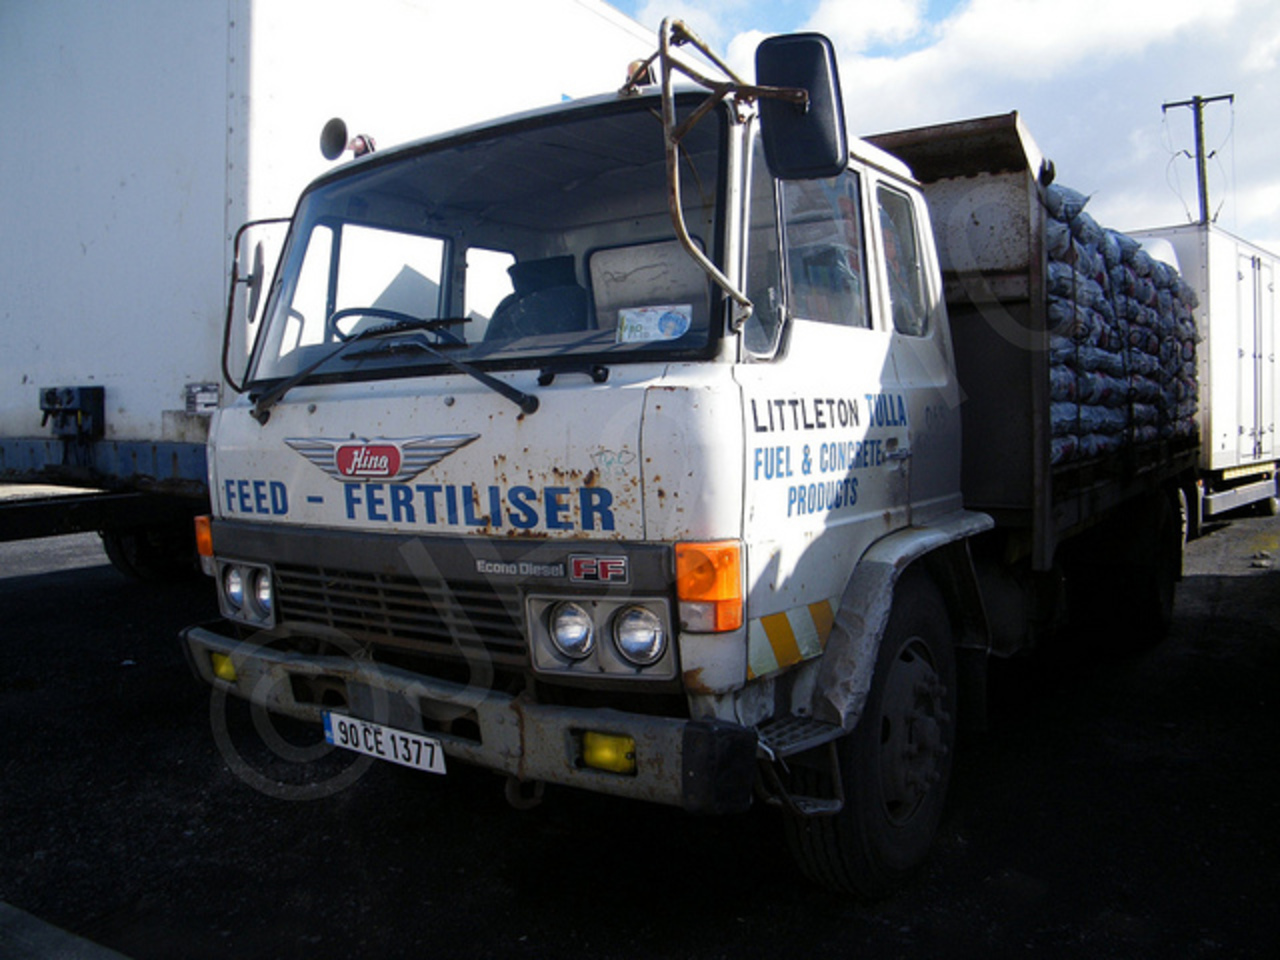 Littleton Tulla HINO FF Econo Diesel 90-CE-1377 | Flickr - Photo ...